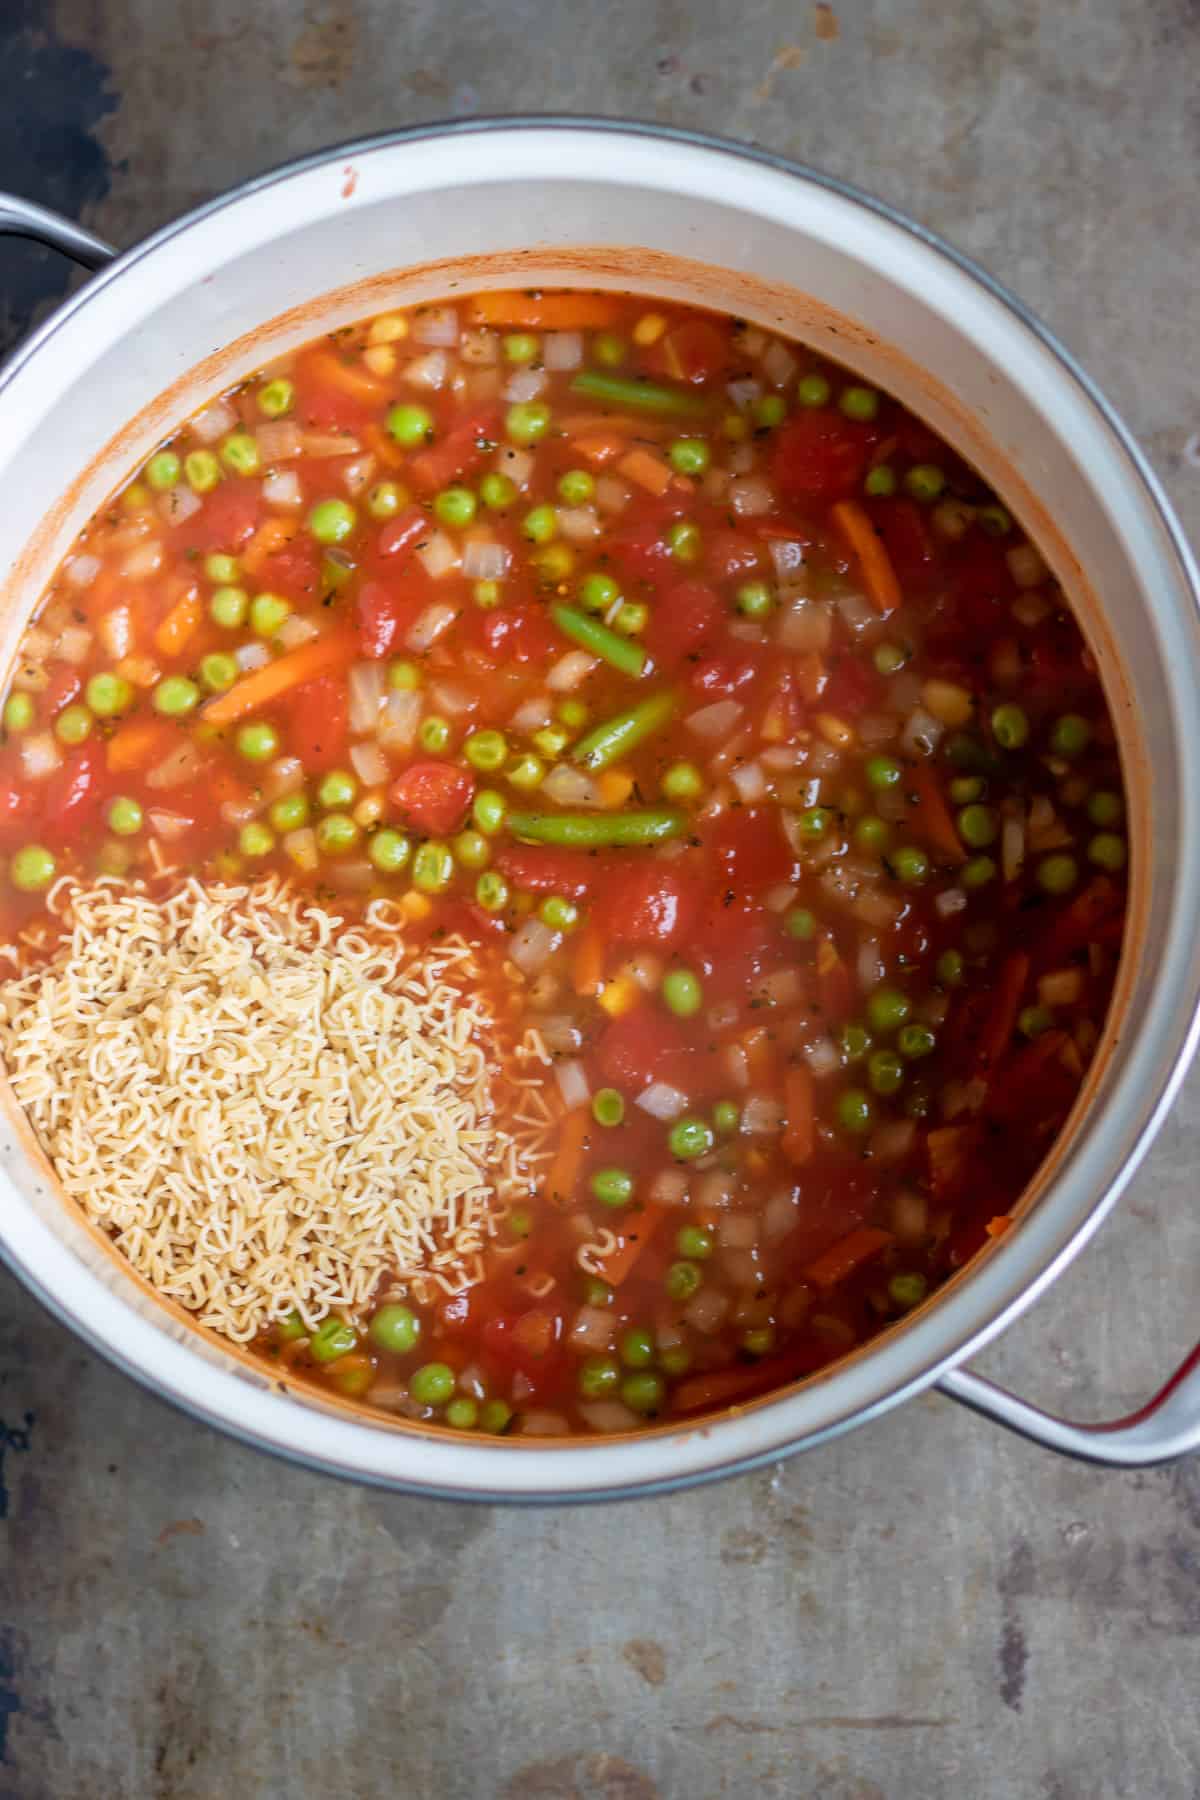 Adding alphabet pasta to the soup base.